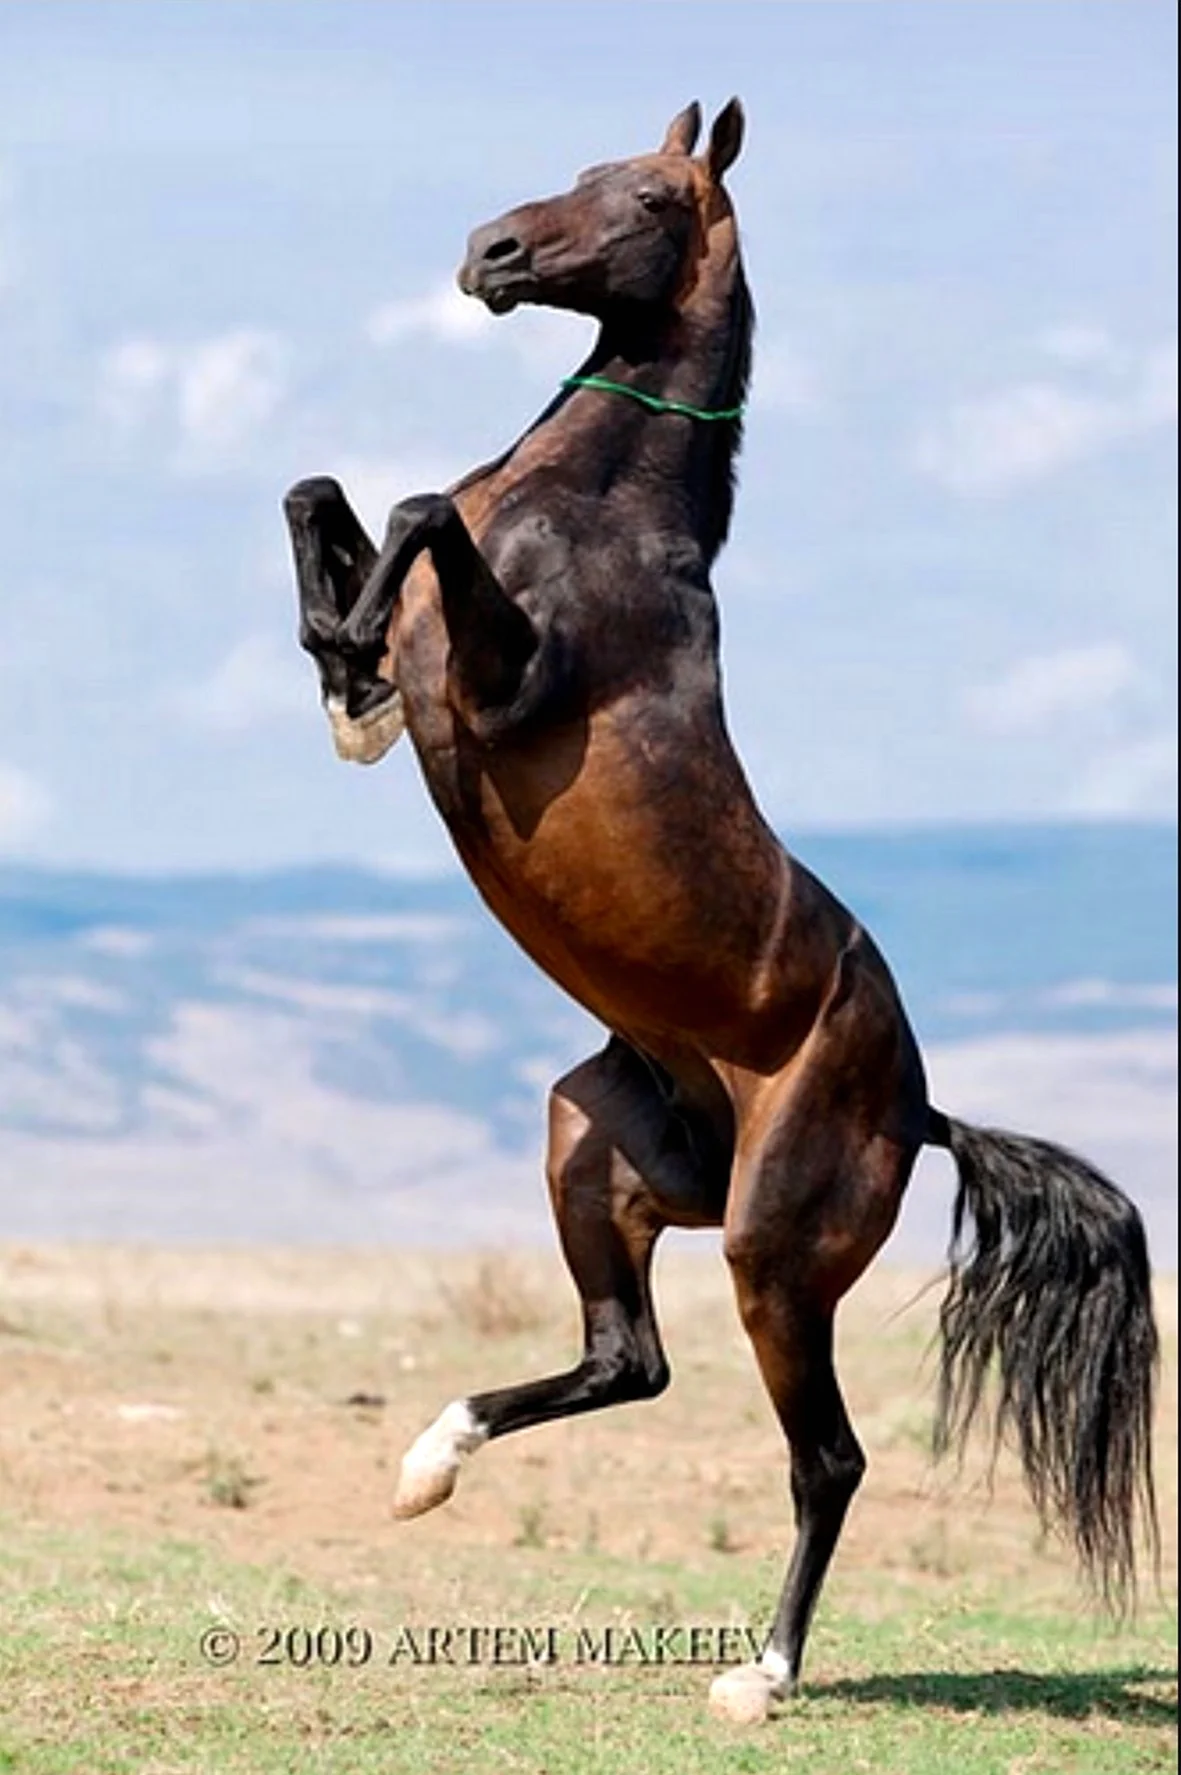 Конь на дыбах. Красивое животное